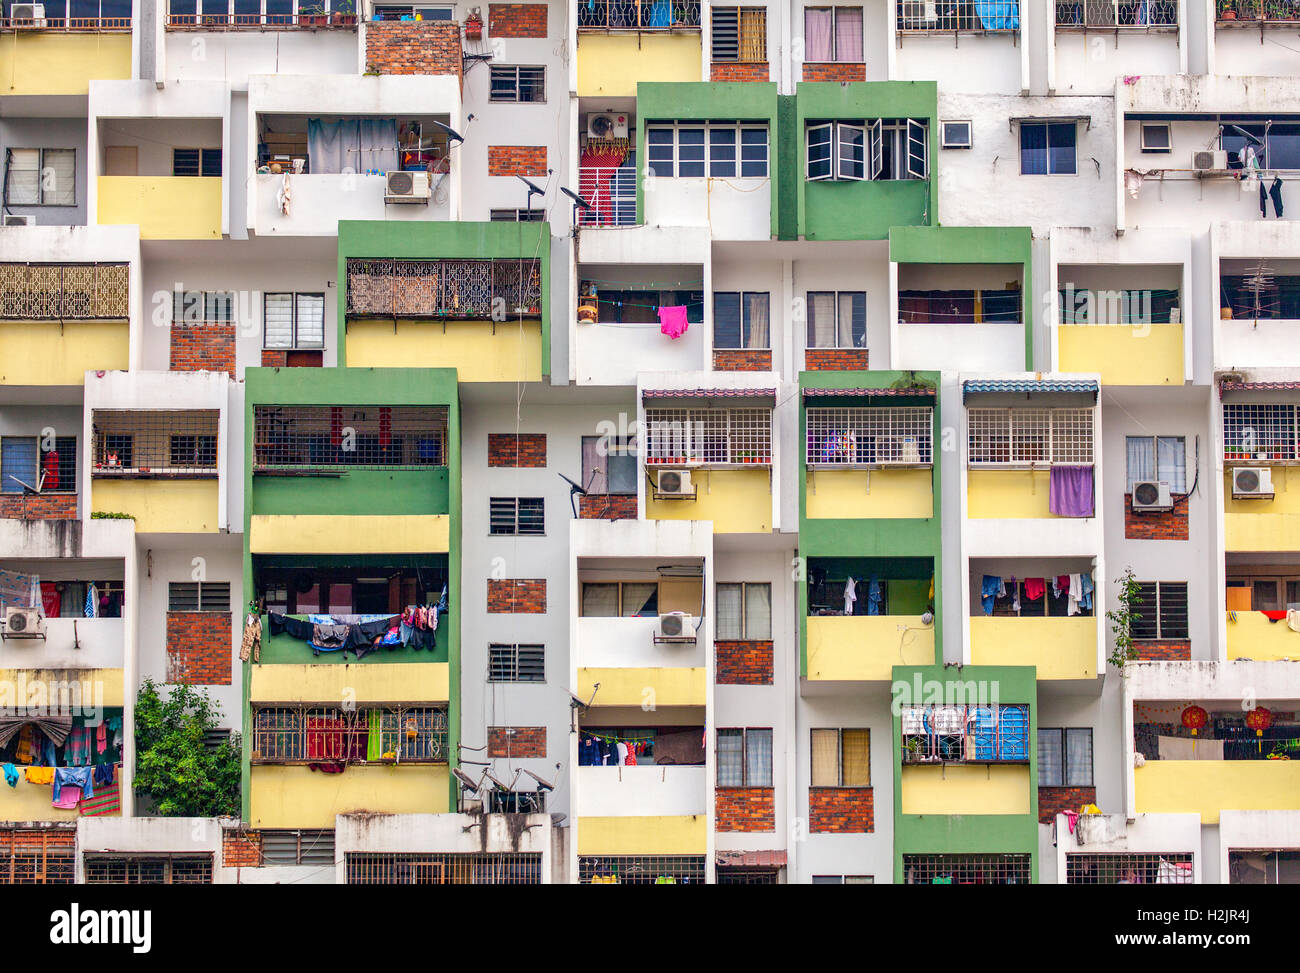 A high-rise multi-family tenement building in Kuala Lumpur, Malaysia, Southeast Asia. Stock Photo